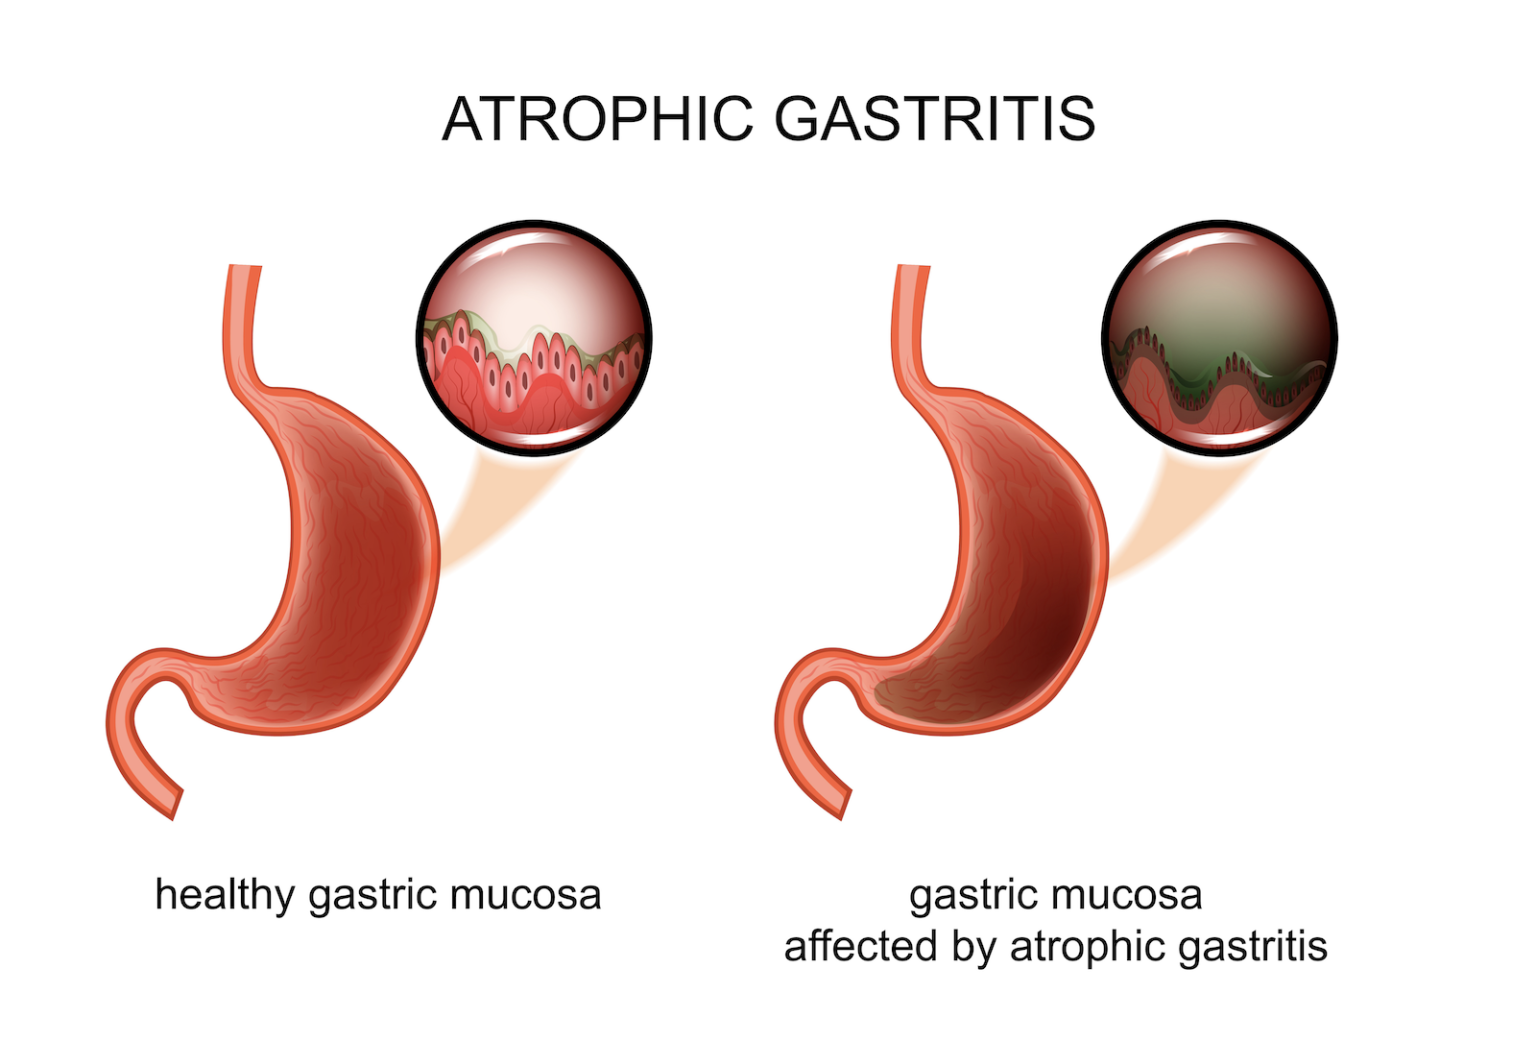 Tratamiento gastritis cronica atrofica